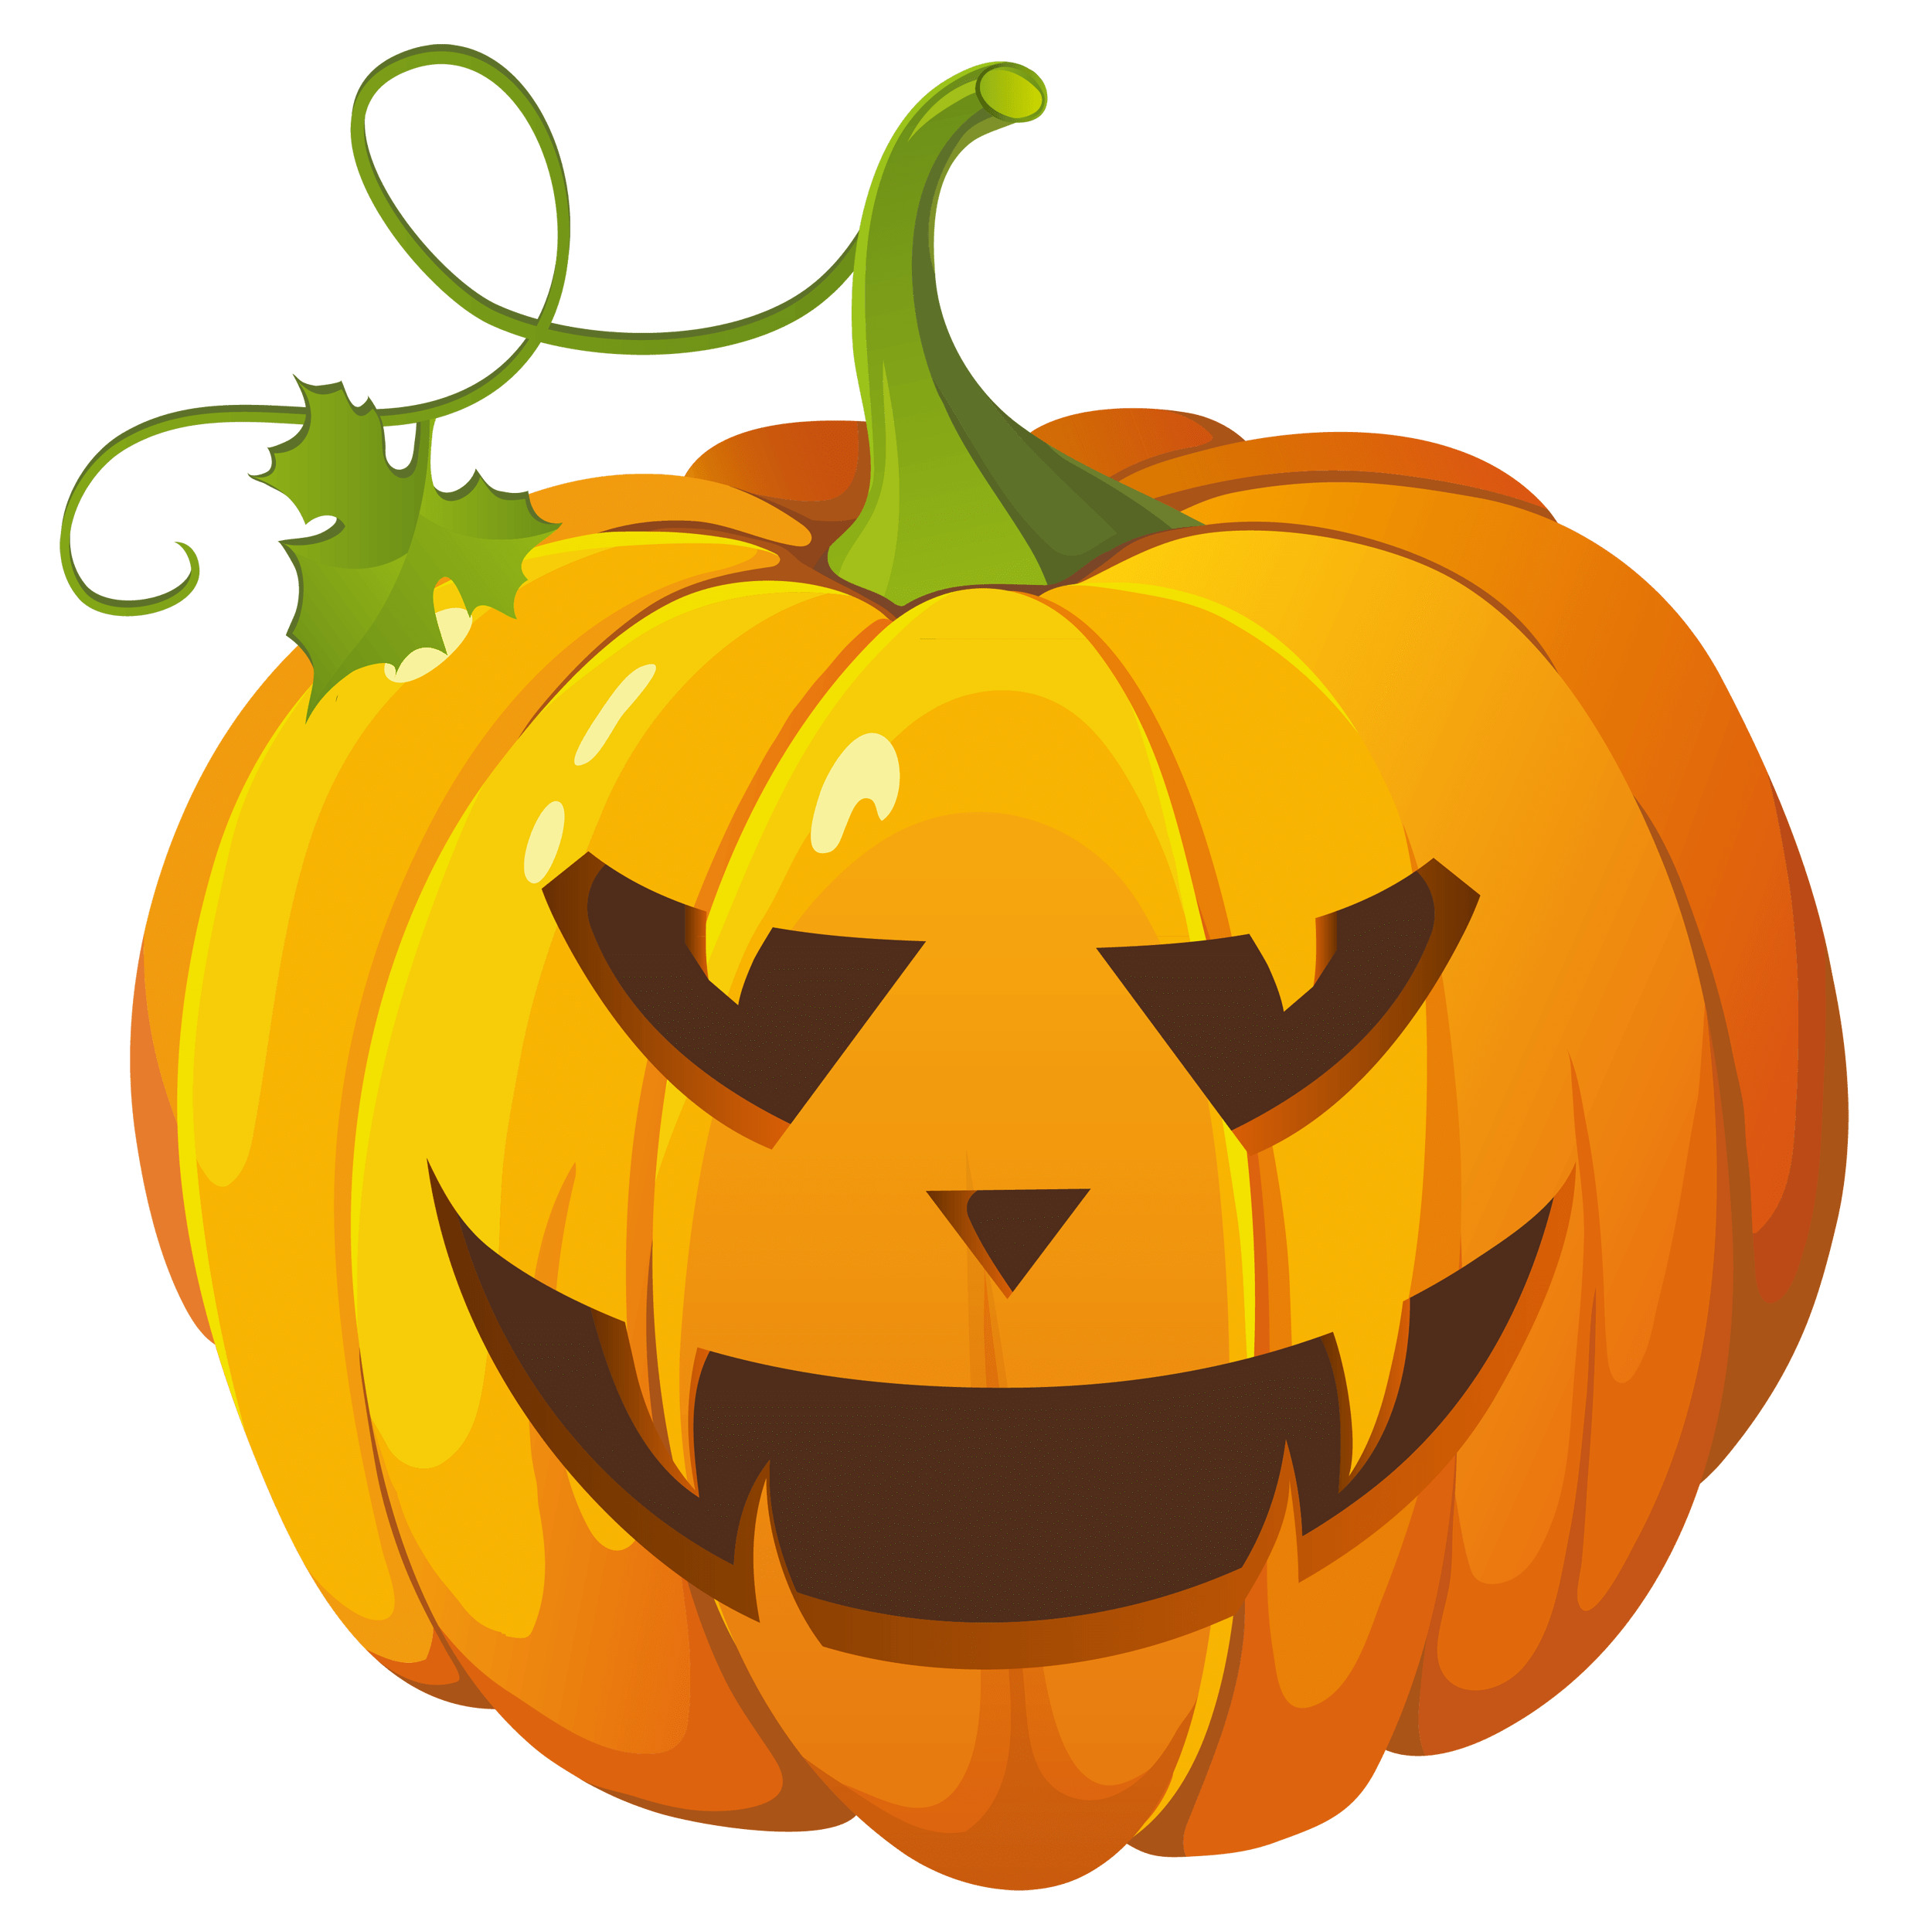 Pumpkin Halloween icons